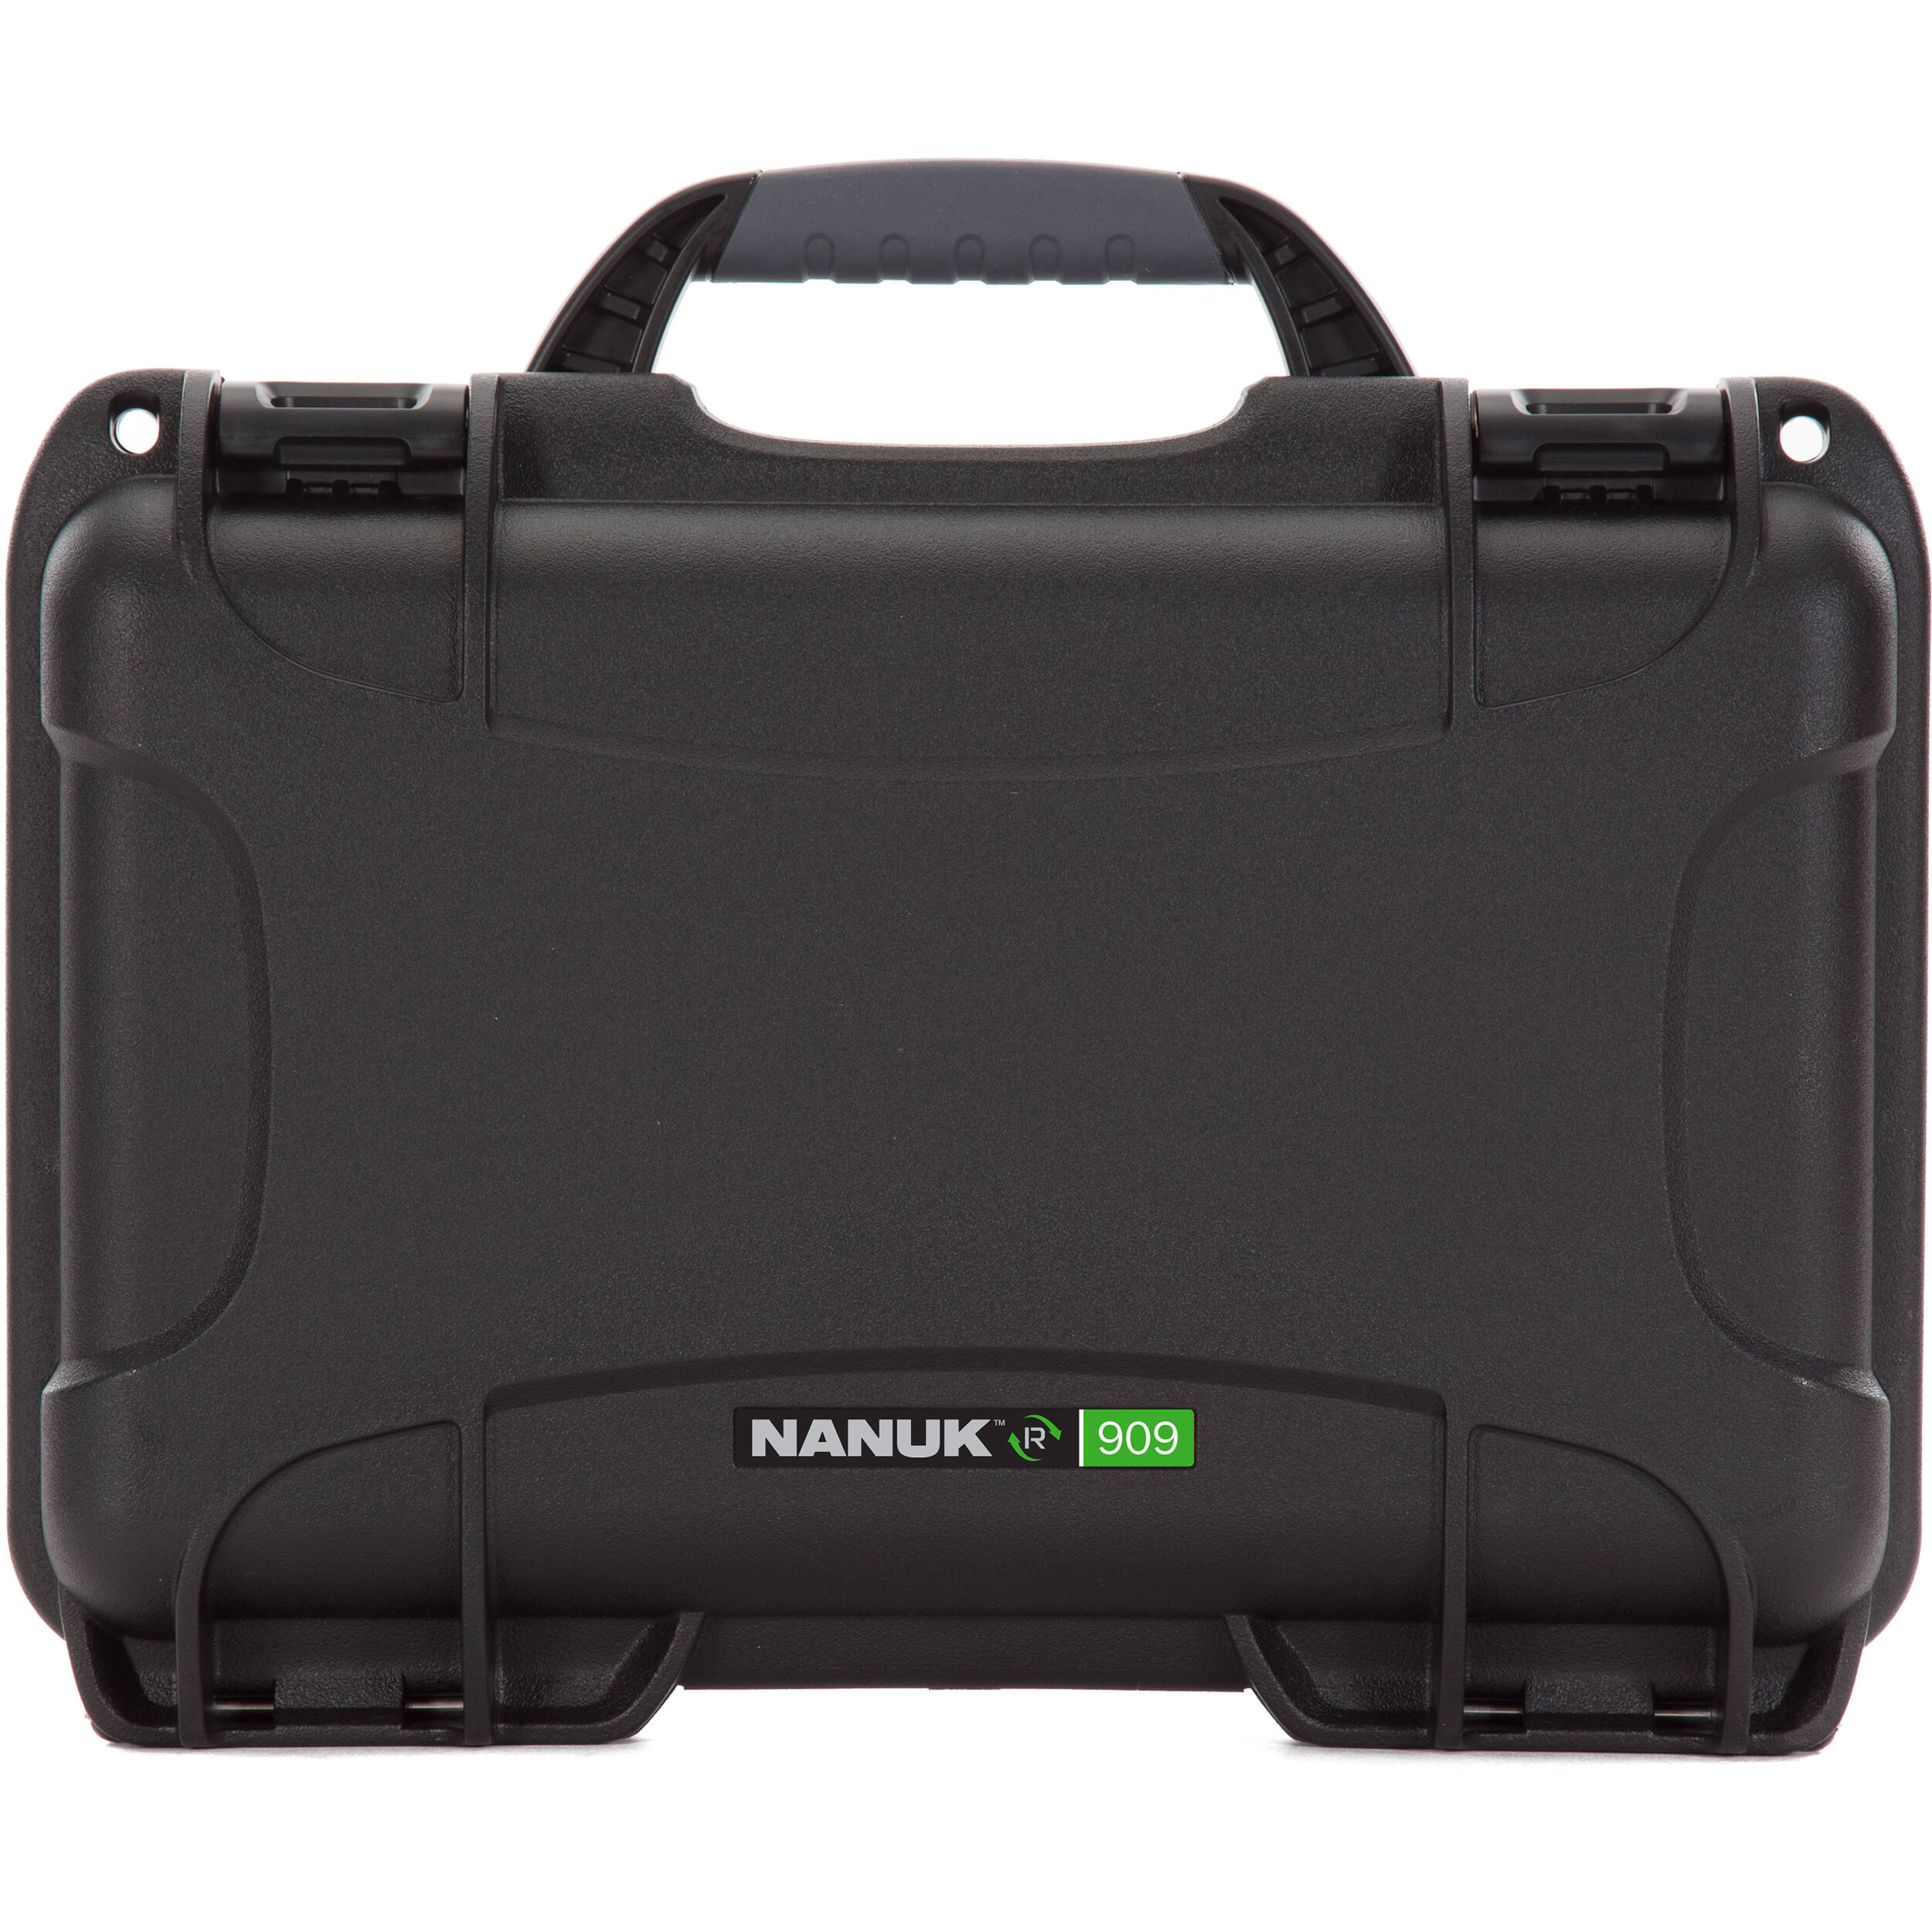 Nanuk R 909 Eco-Friendly Hard Case (Black, 4.8L, Empty)